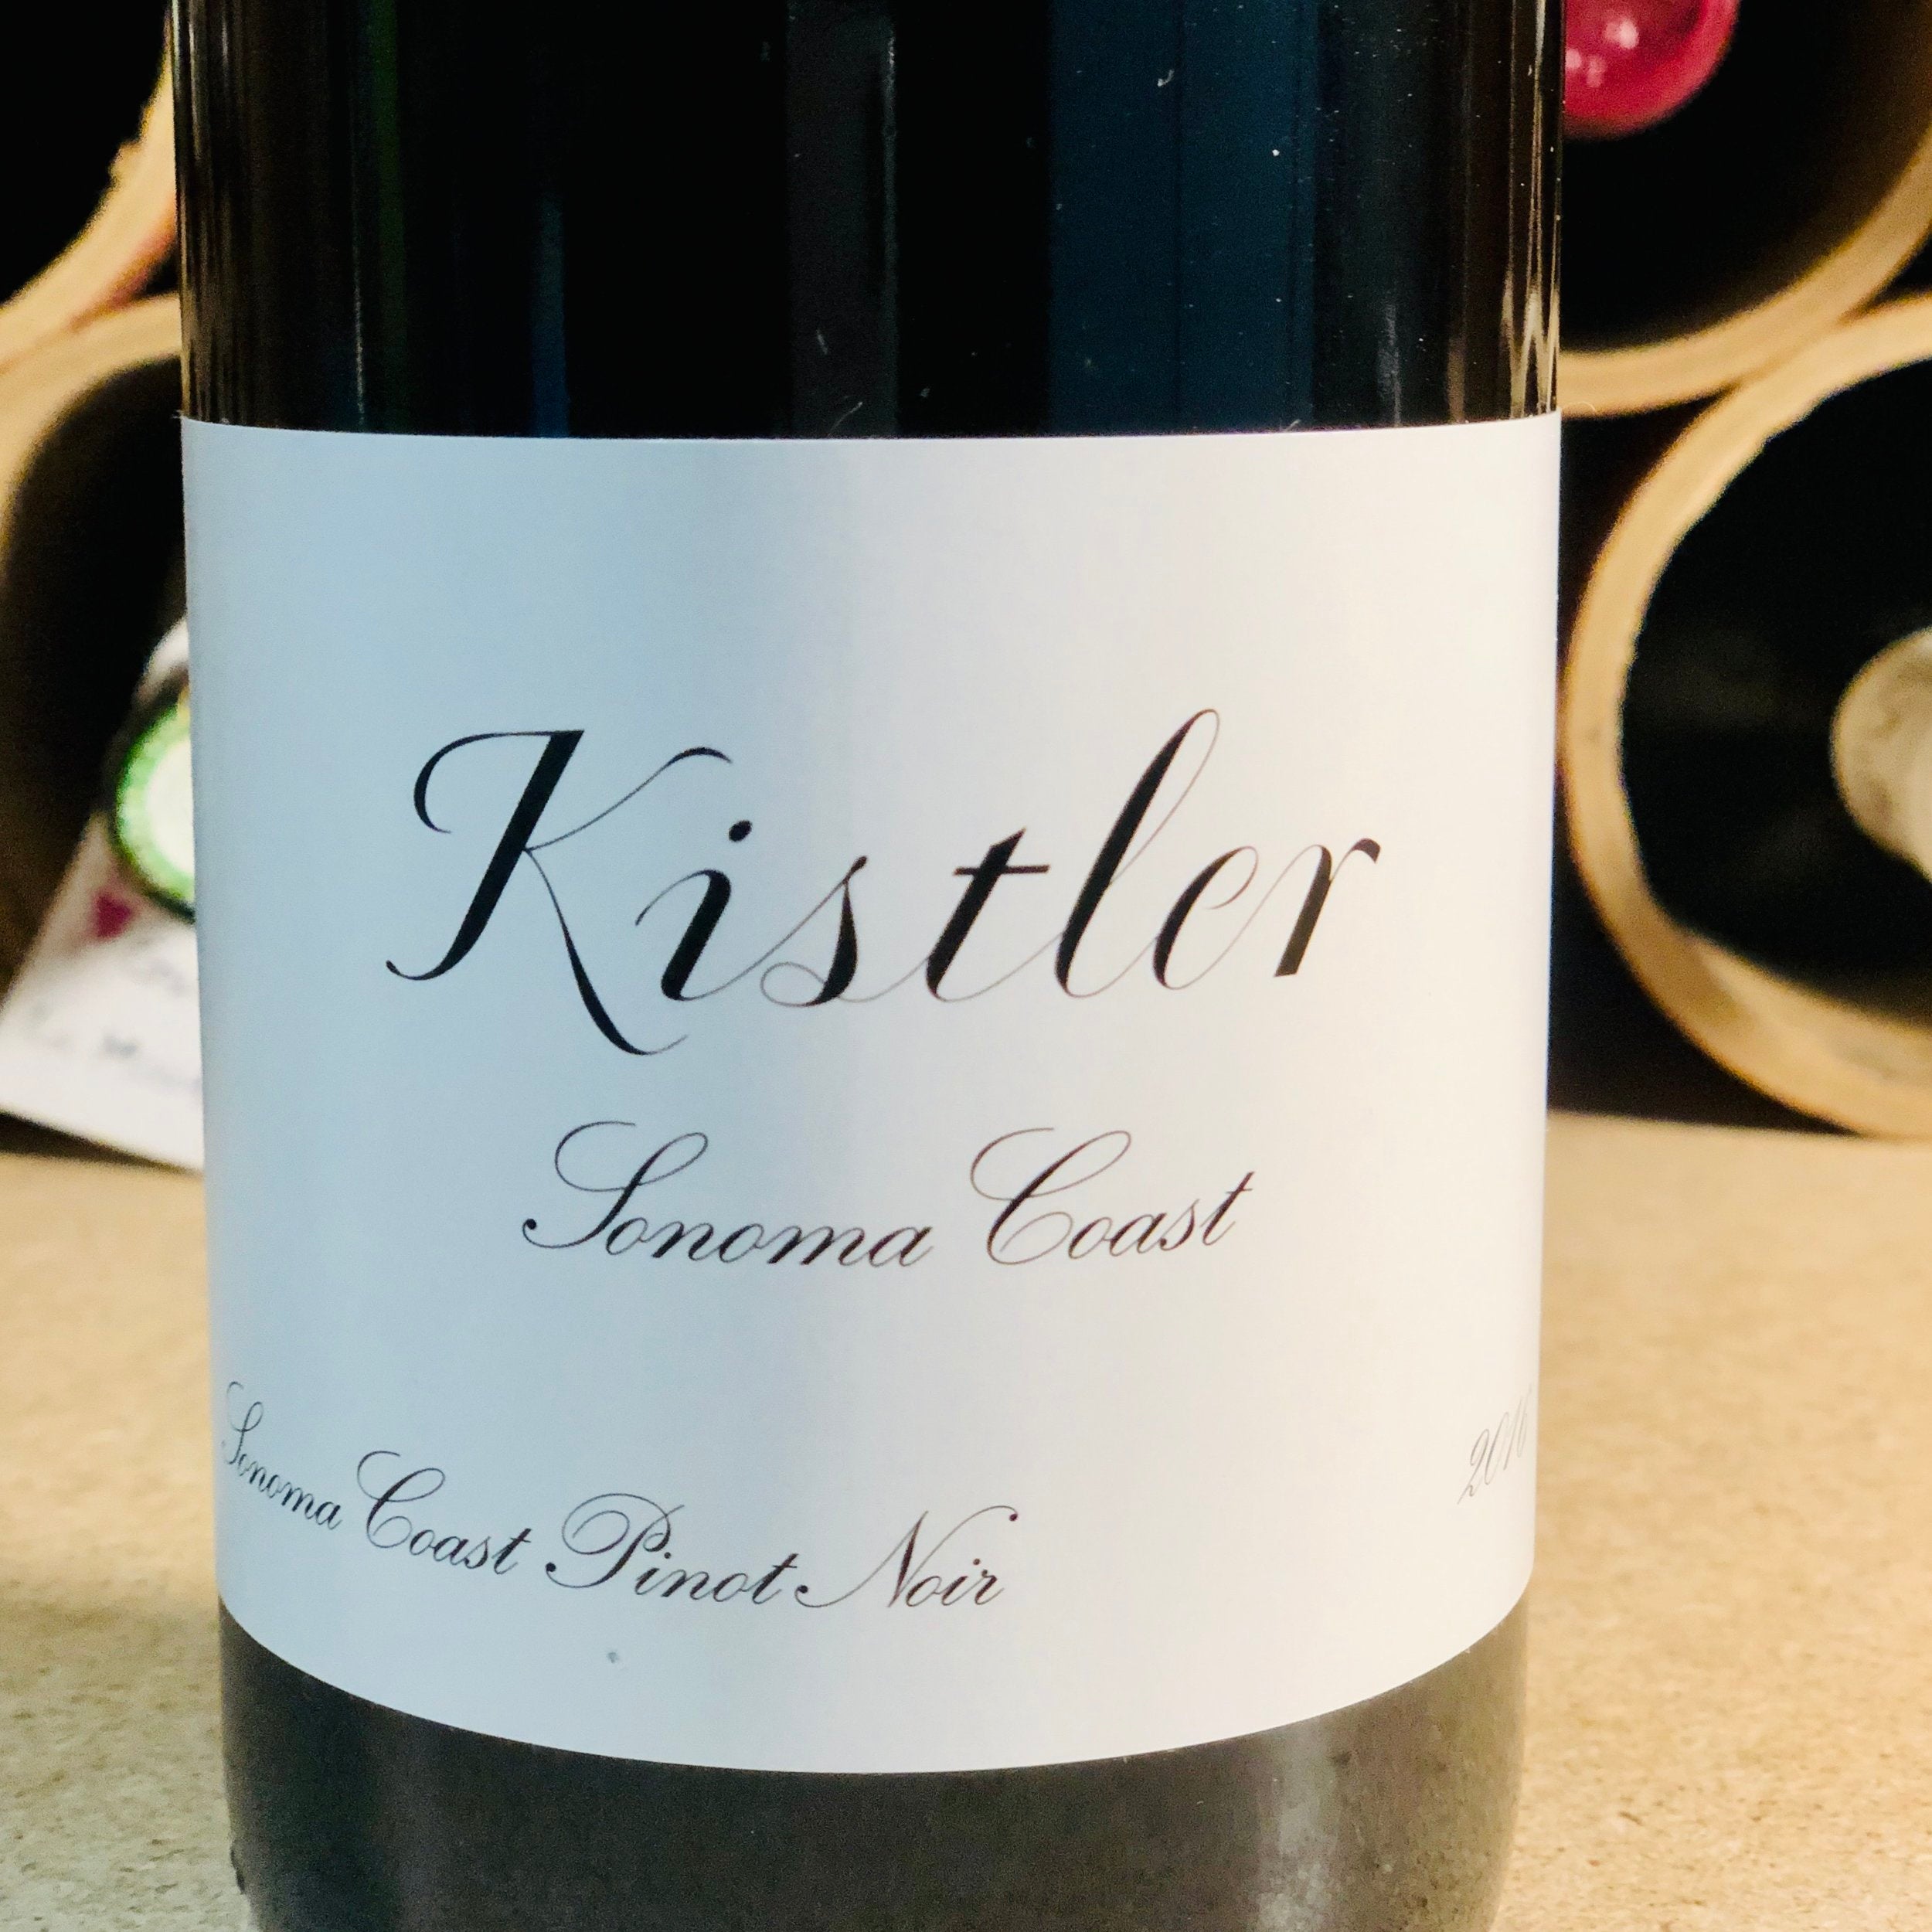 Kistler, Sonoma Coast, Pinot Noir 2016